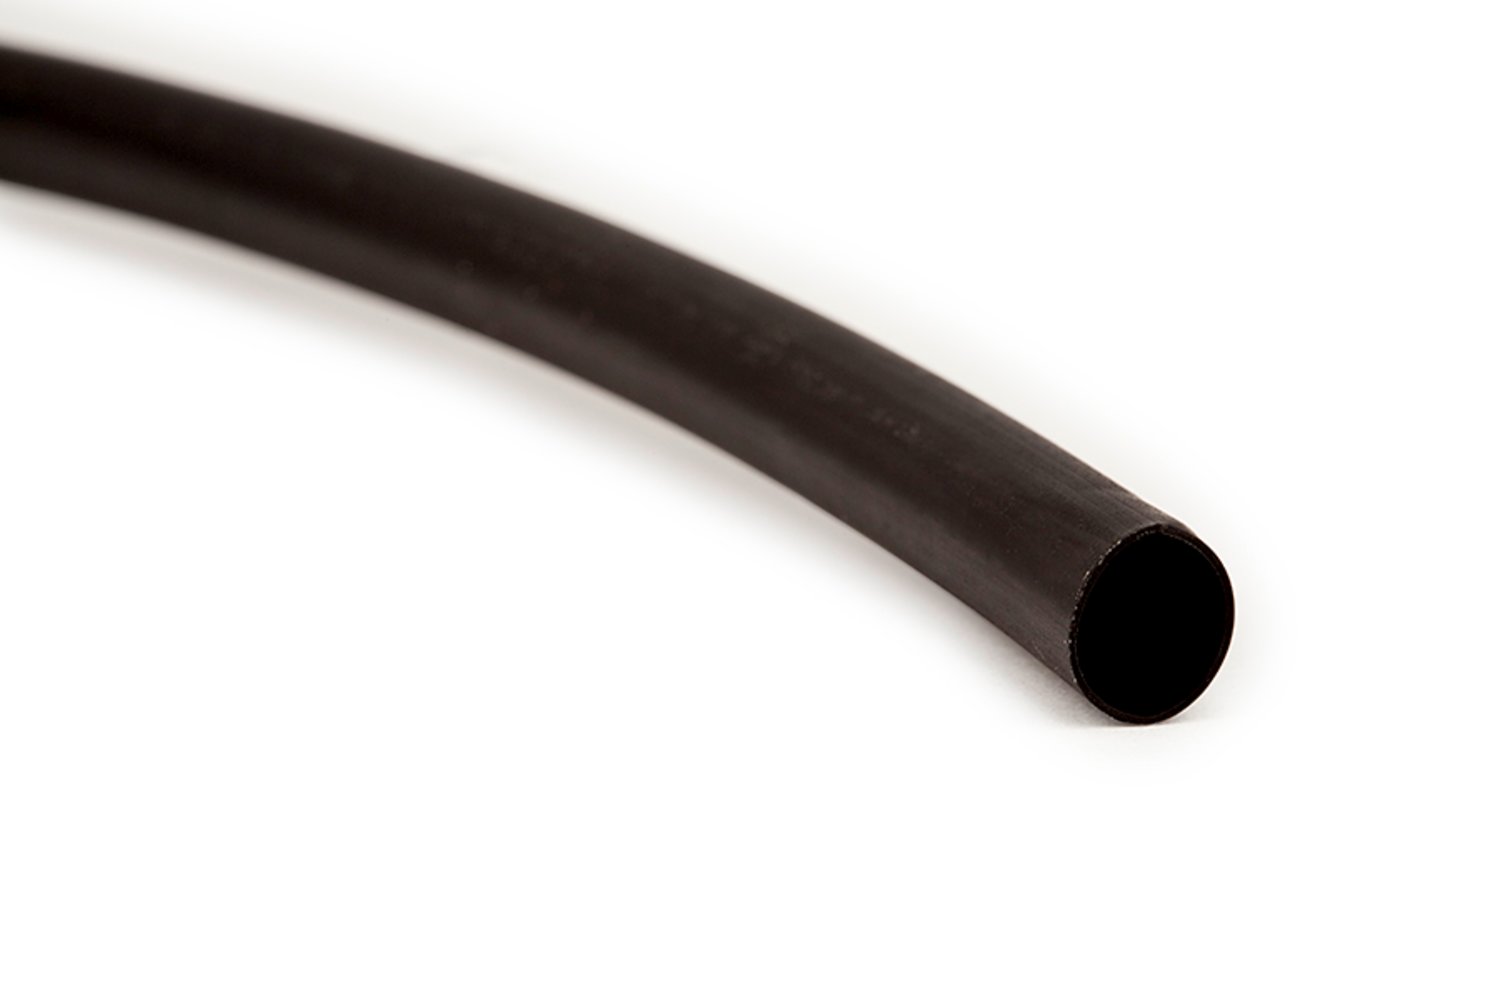 7100056040 - 3M Modified Fluoroelastomer Tubing VTN-200-1 1/4-Black, 50 ft Length
per spool, 1 spool per carton, 1 Roll/Case